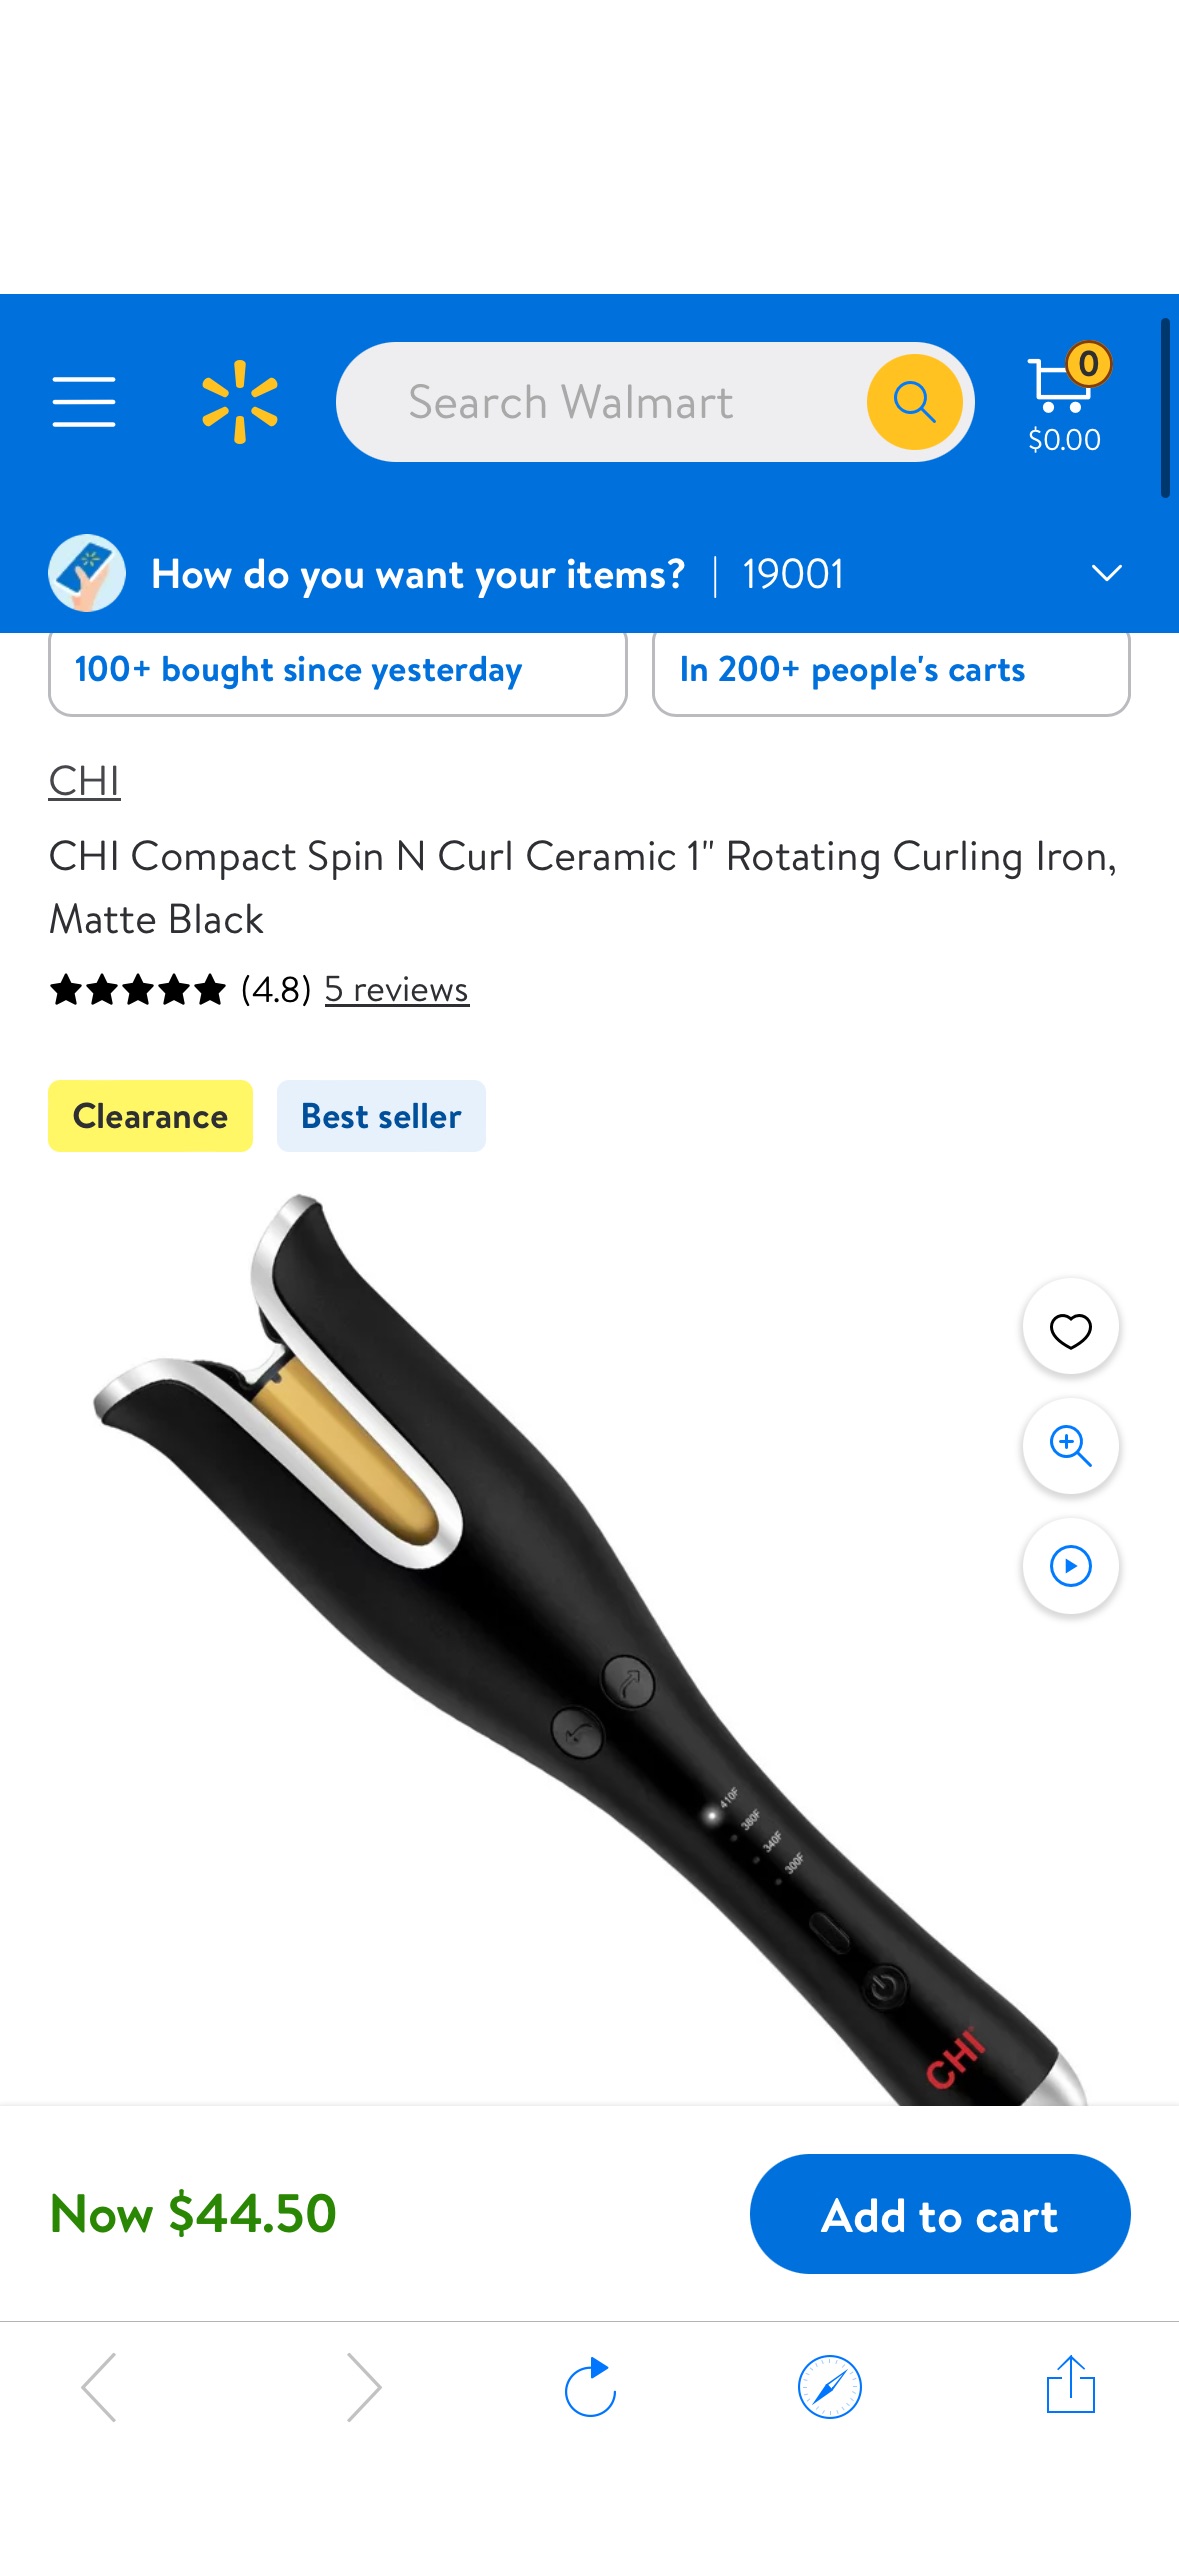 CHI Compact Spin N Curl Ceramic 1" Rotating Curling Iron, Matte Black - Walmart.com